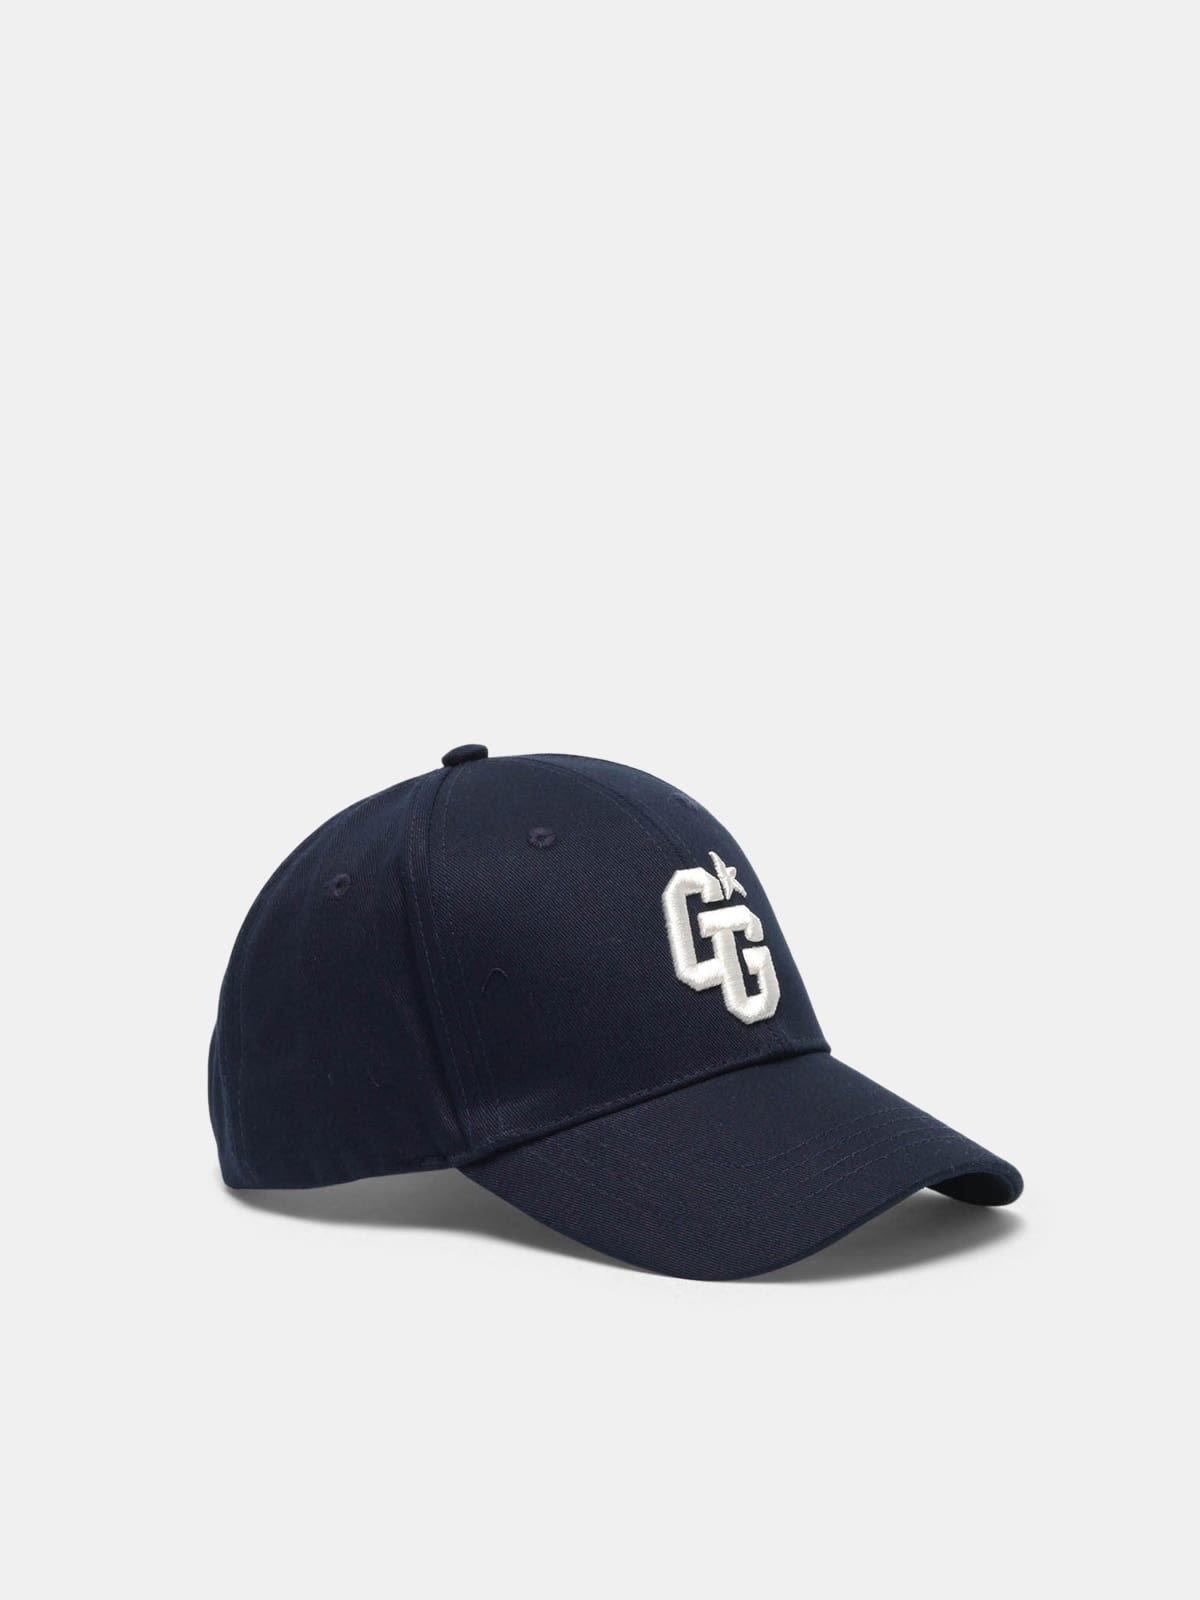 Aki baseball cap with GG embroidery